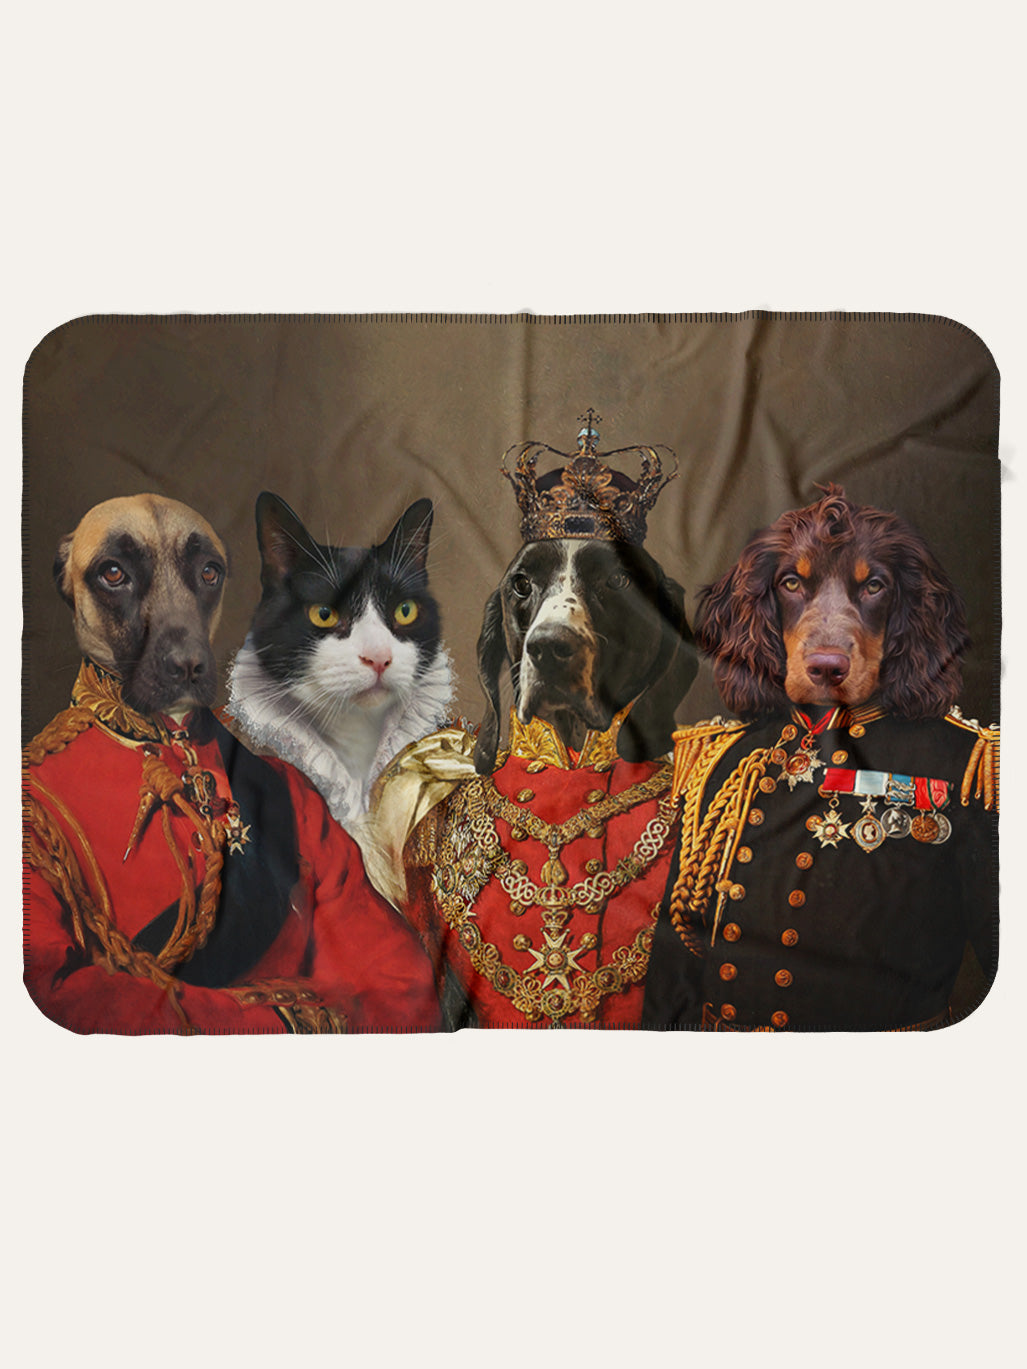 The Ambassador, Princess, Prince & Earl - Custom Pet Blanket